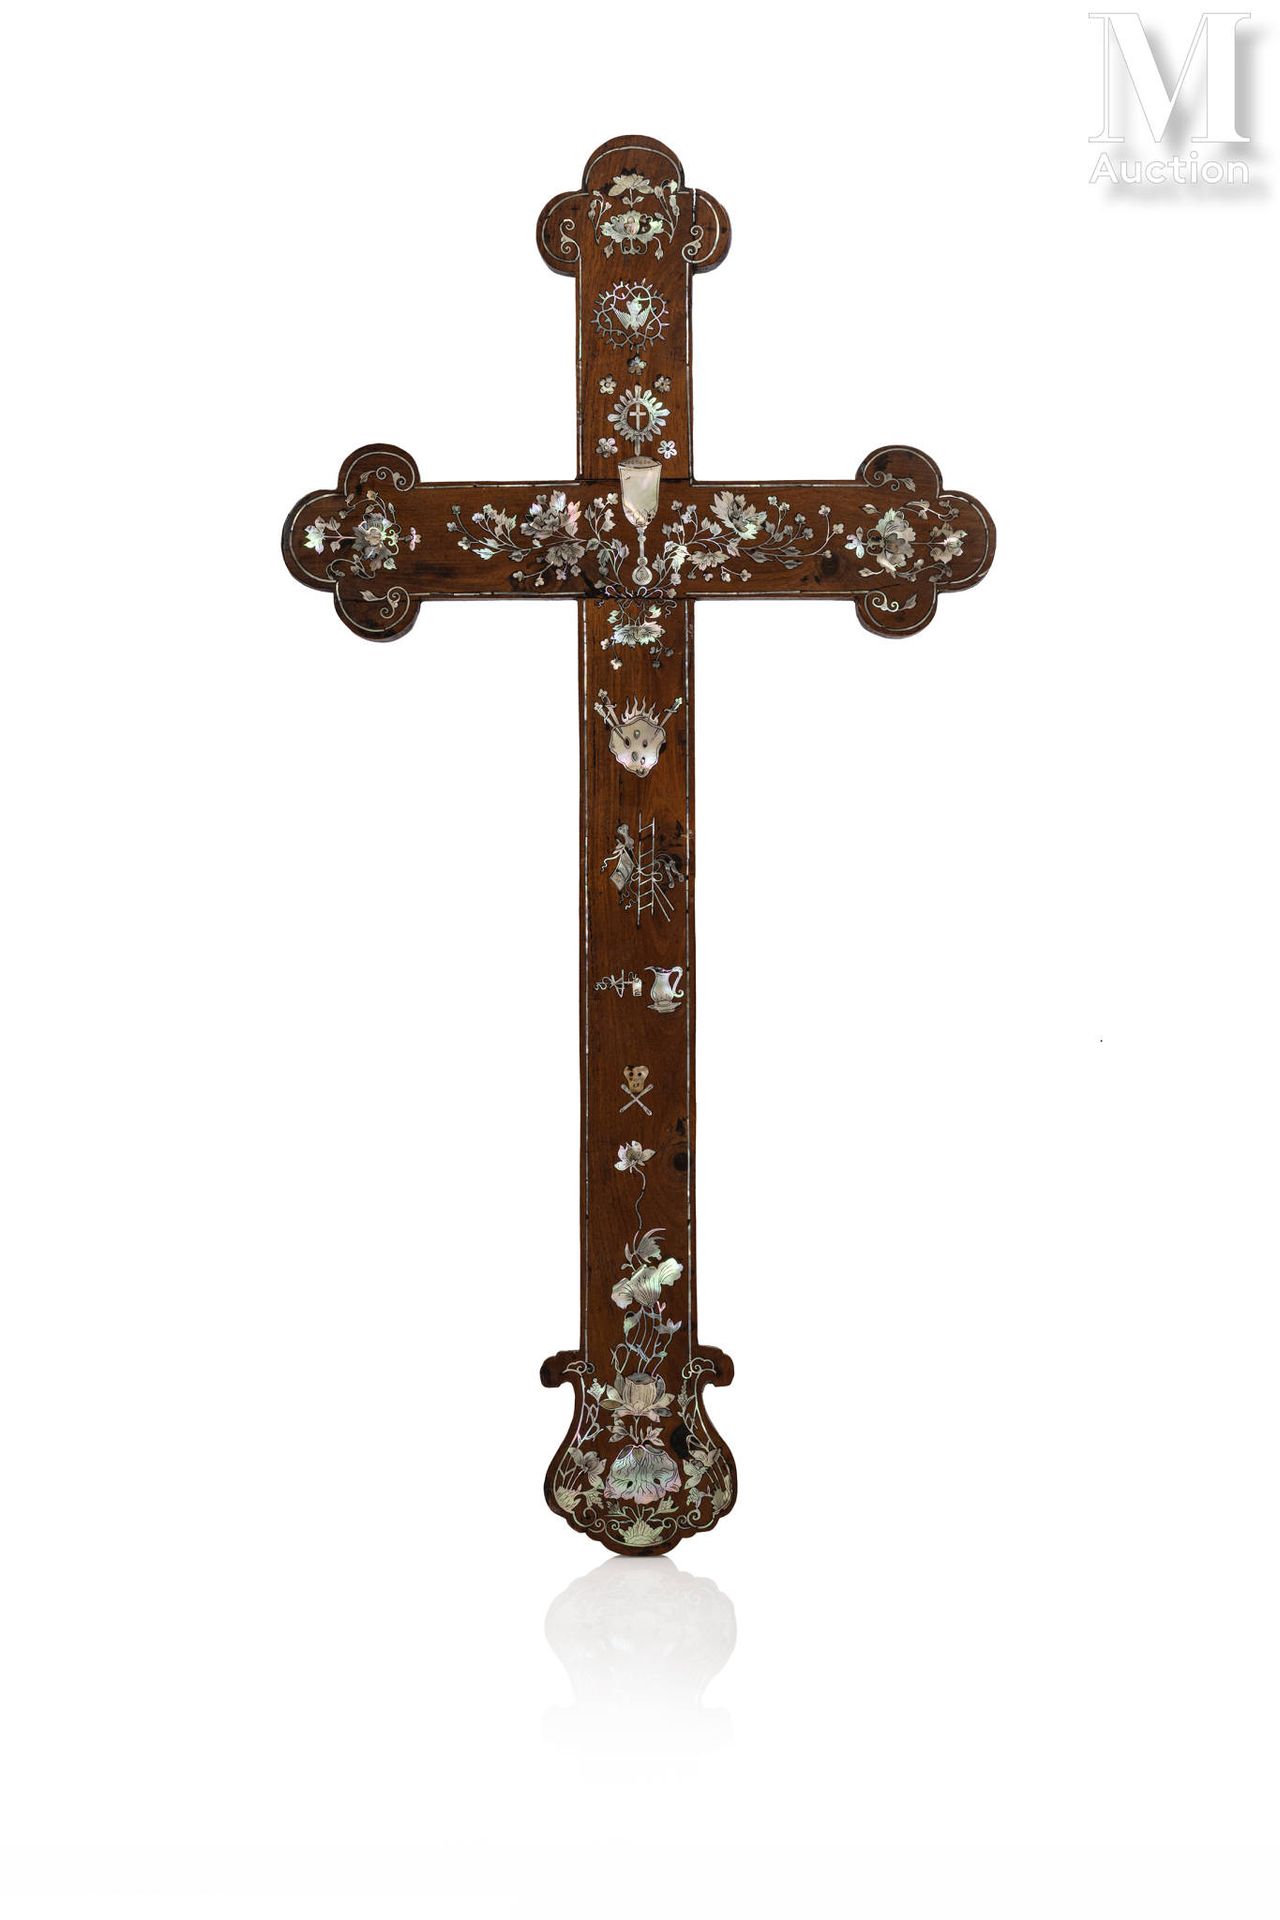 CHINE DU SUD, XIXe siècle 基督徒的十字架

天然木制，装饰有珍珠母镶嵌的基督教符号和花卷。
高度：56厘米
宽度：28厘米